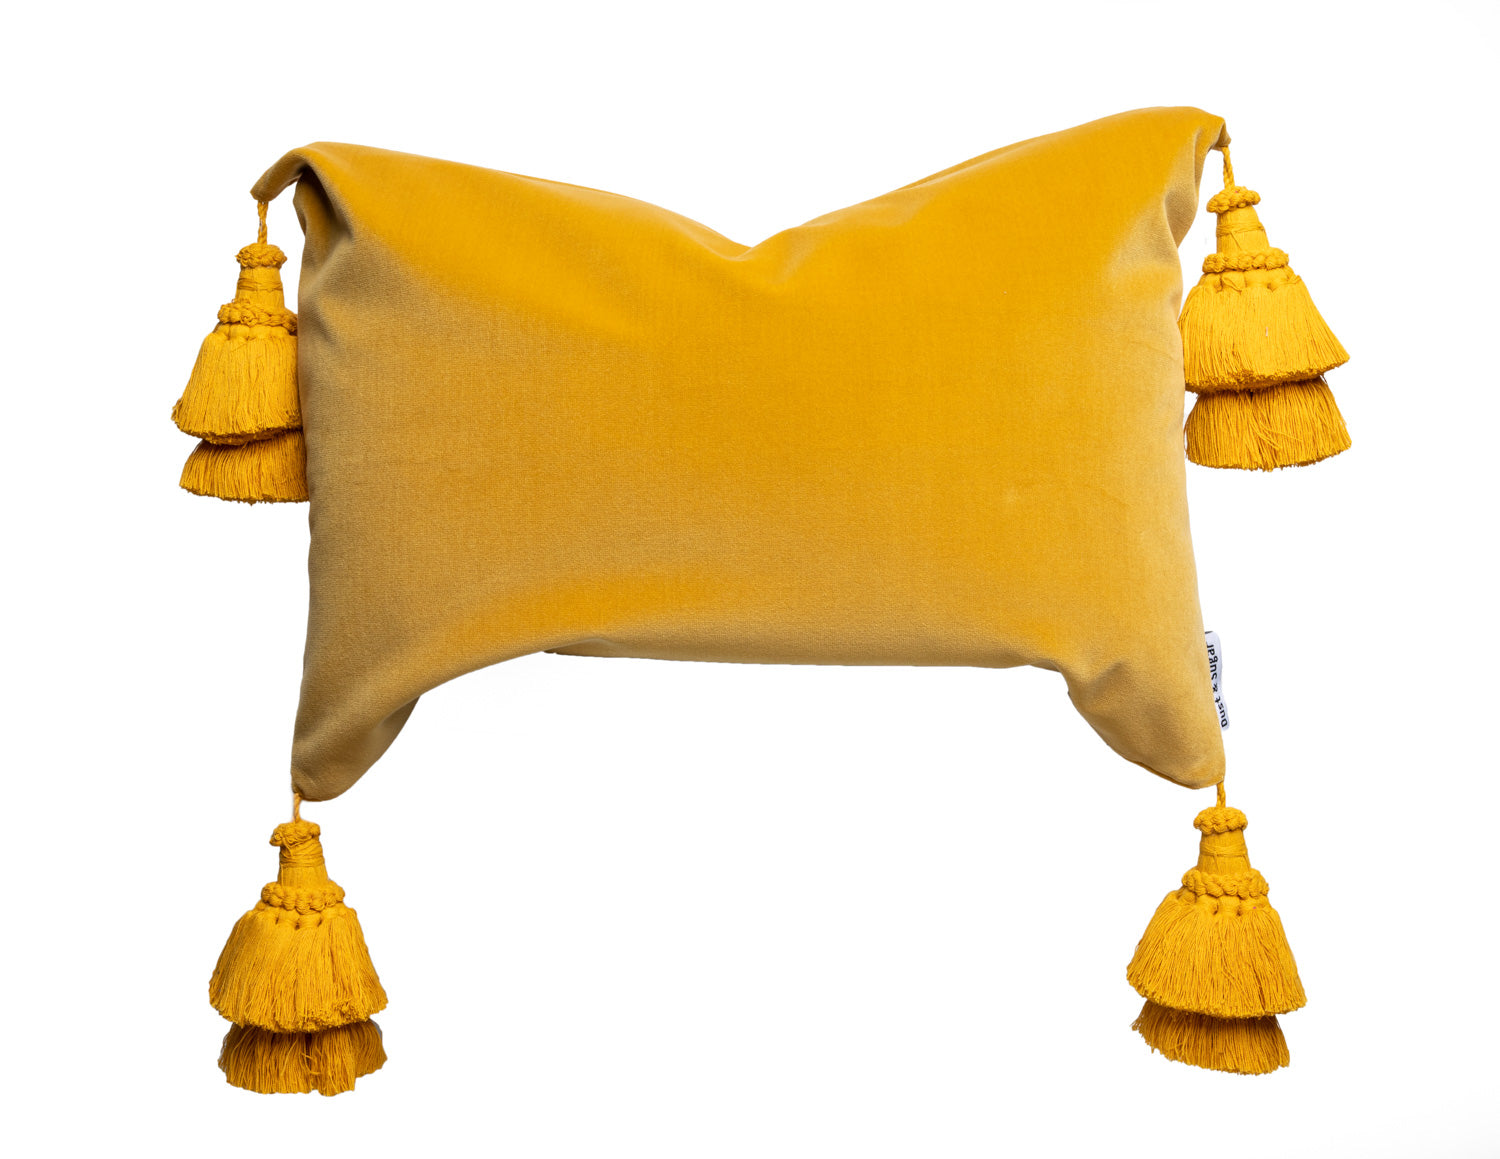 Mustard Yellow Pillow With Handmade Tassels